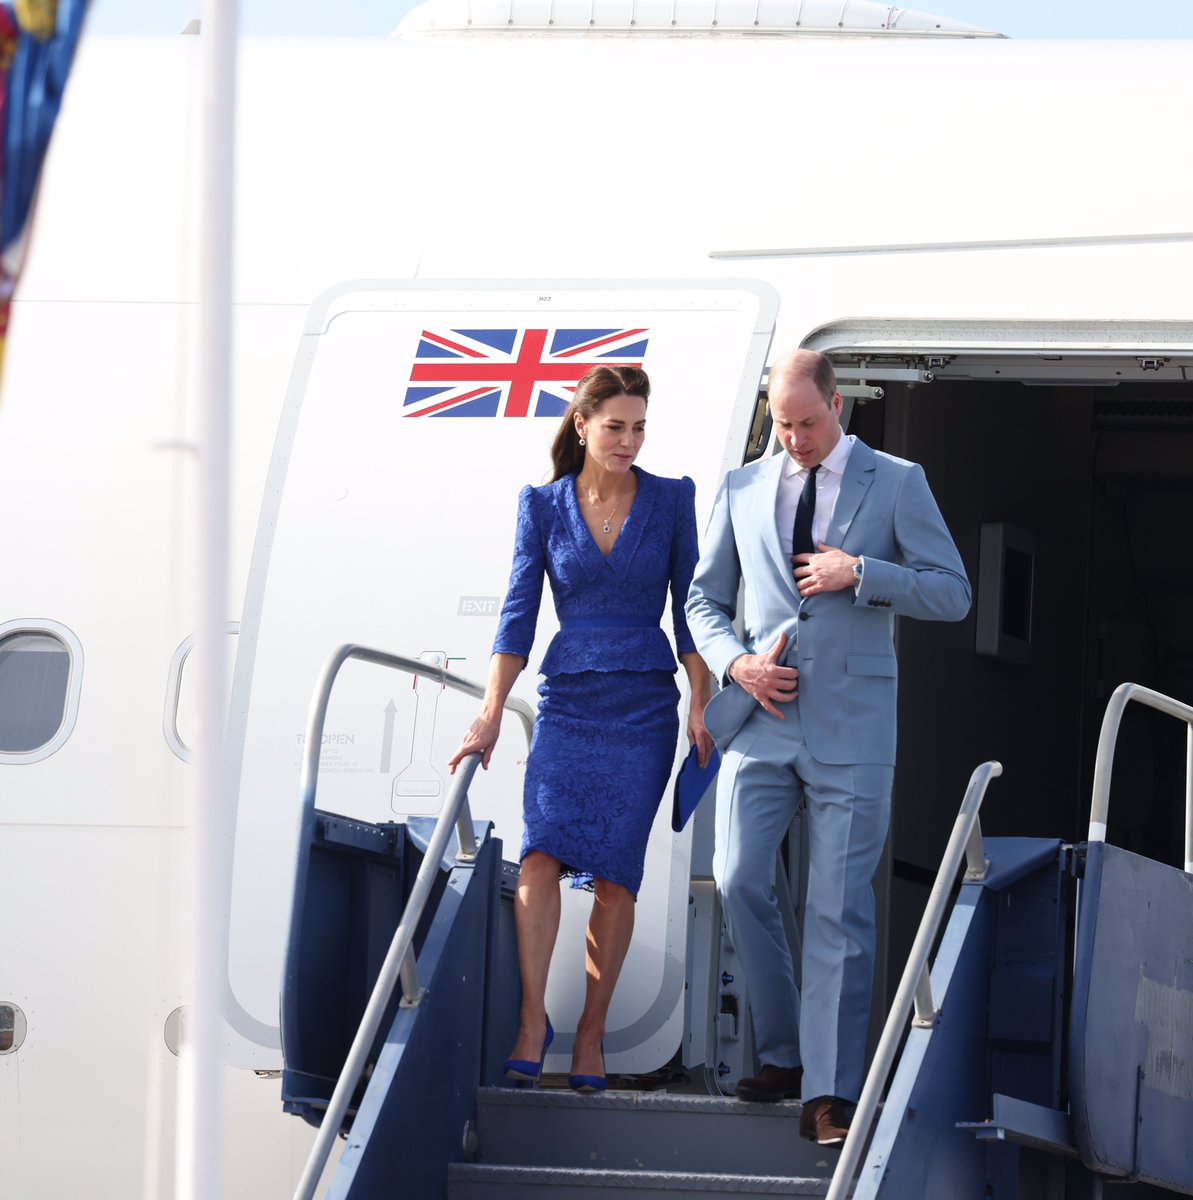 RT @RoyalReporter: Kate is wearing a blue Jenny Packham dress. Pic by @ianvogler https://t.co/1lgd2tYgIt